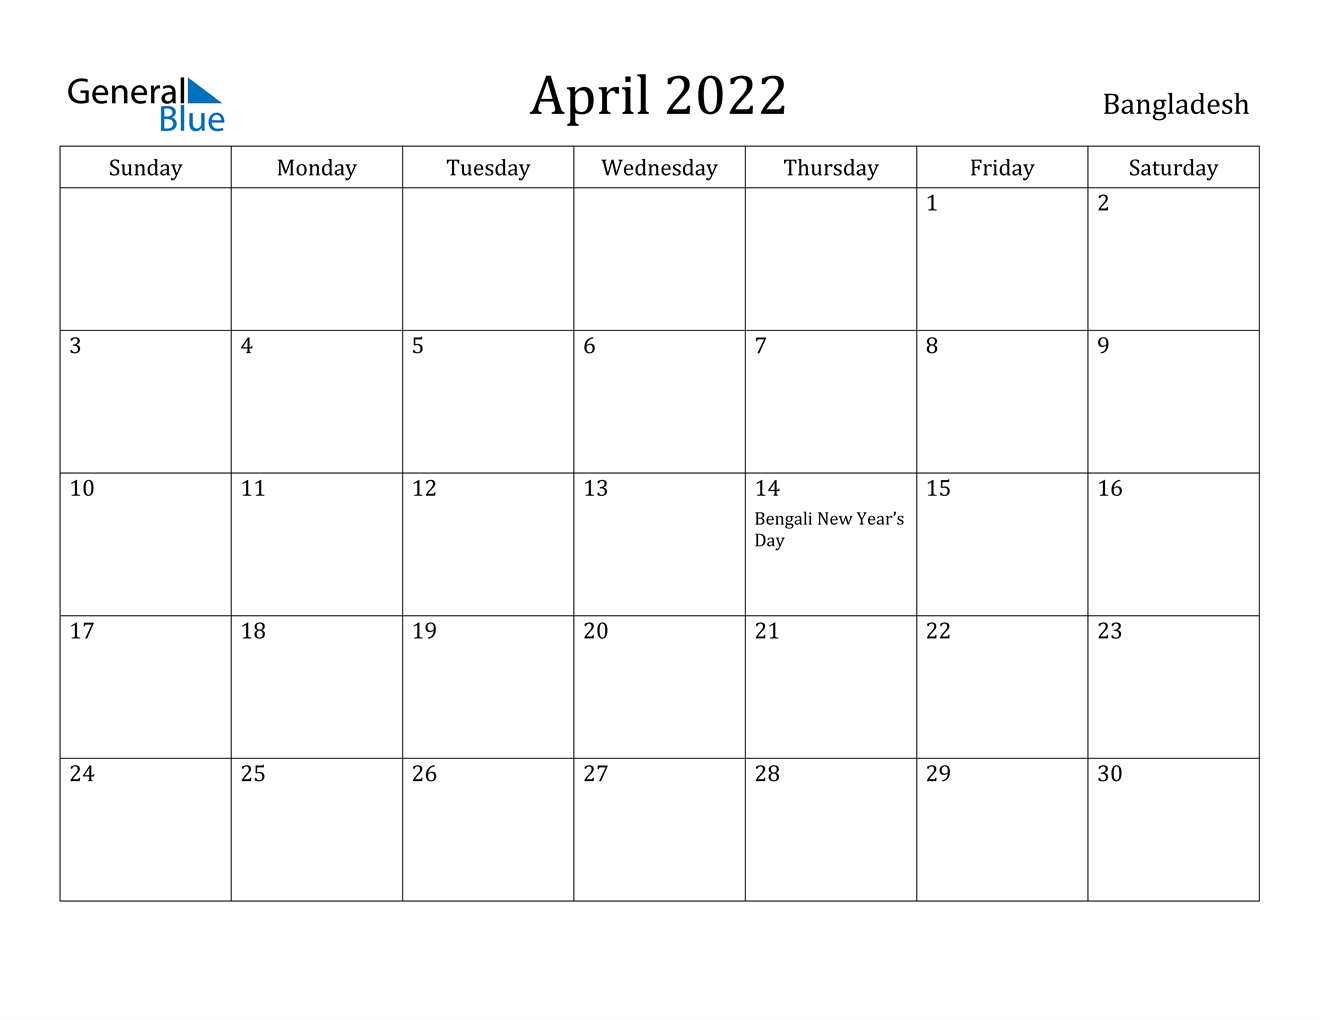 April 2022 Calendar - Bangladesh